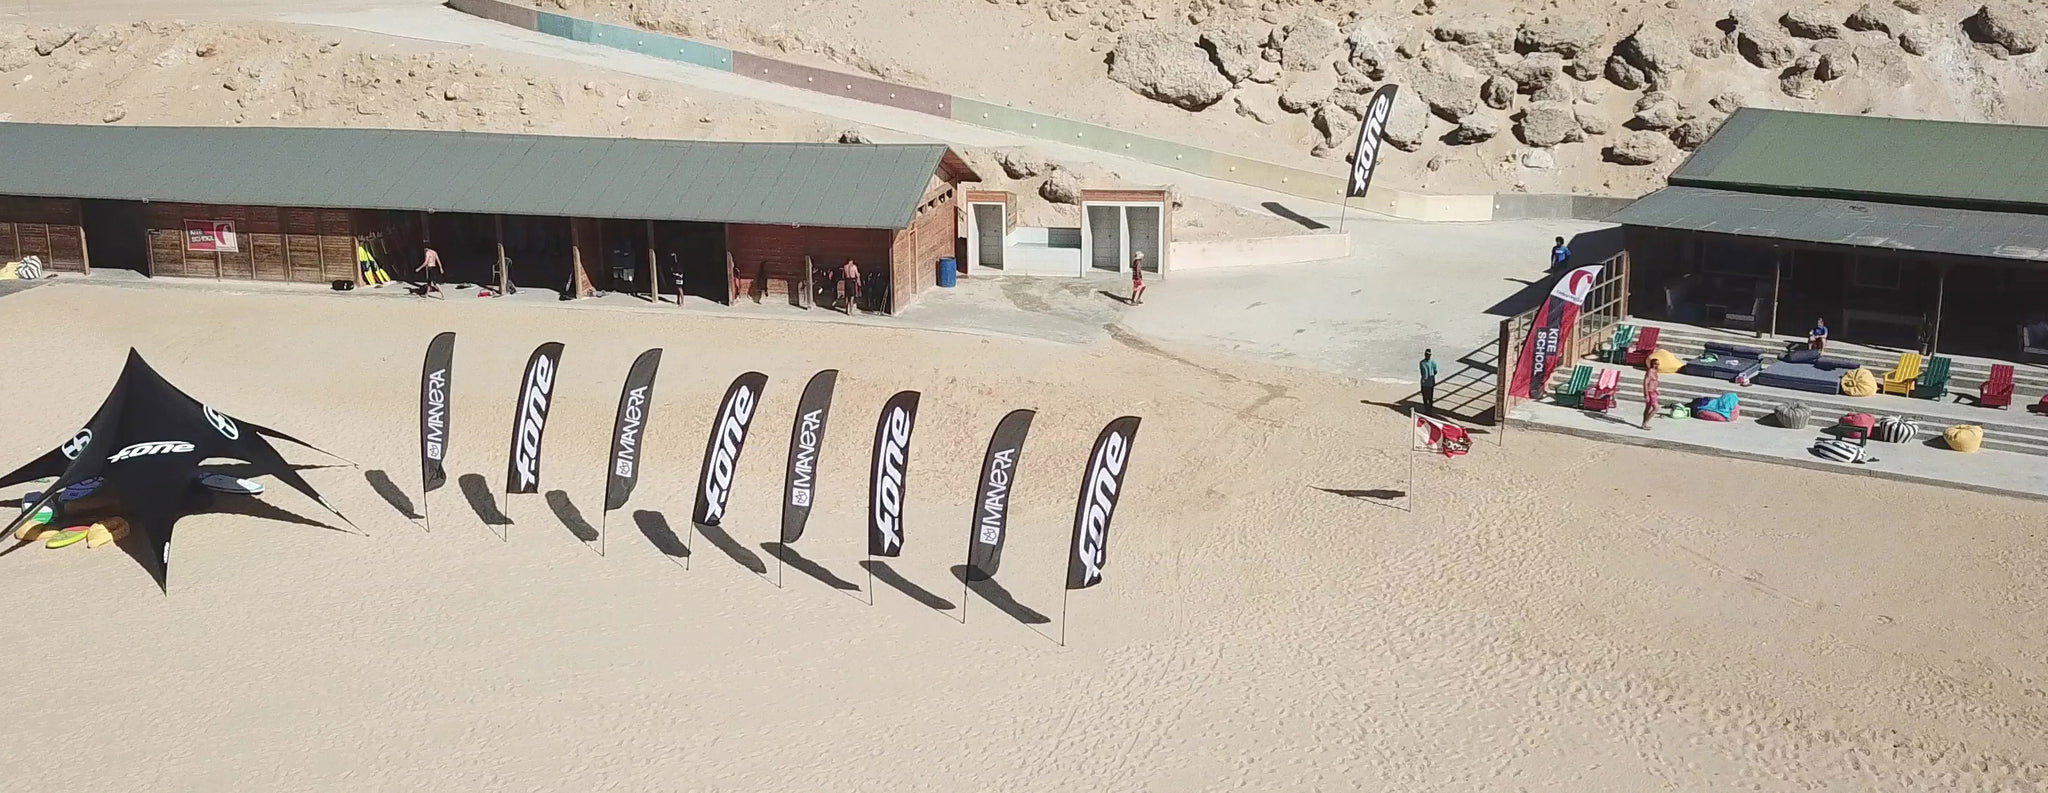 Das F-ONE Procenter des Kiteboarding Club in Dakhla in Marokko